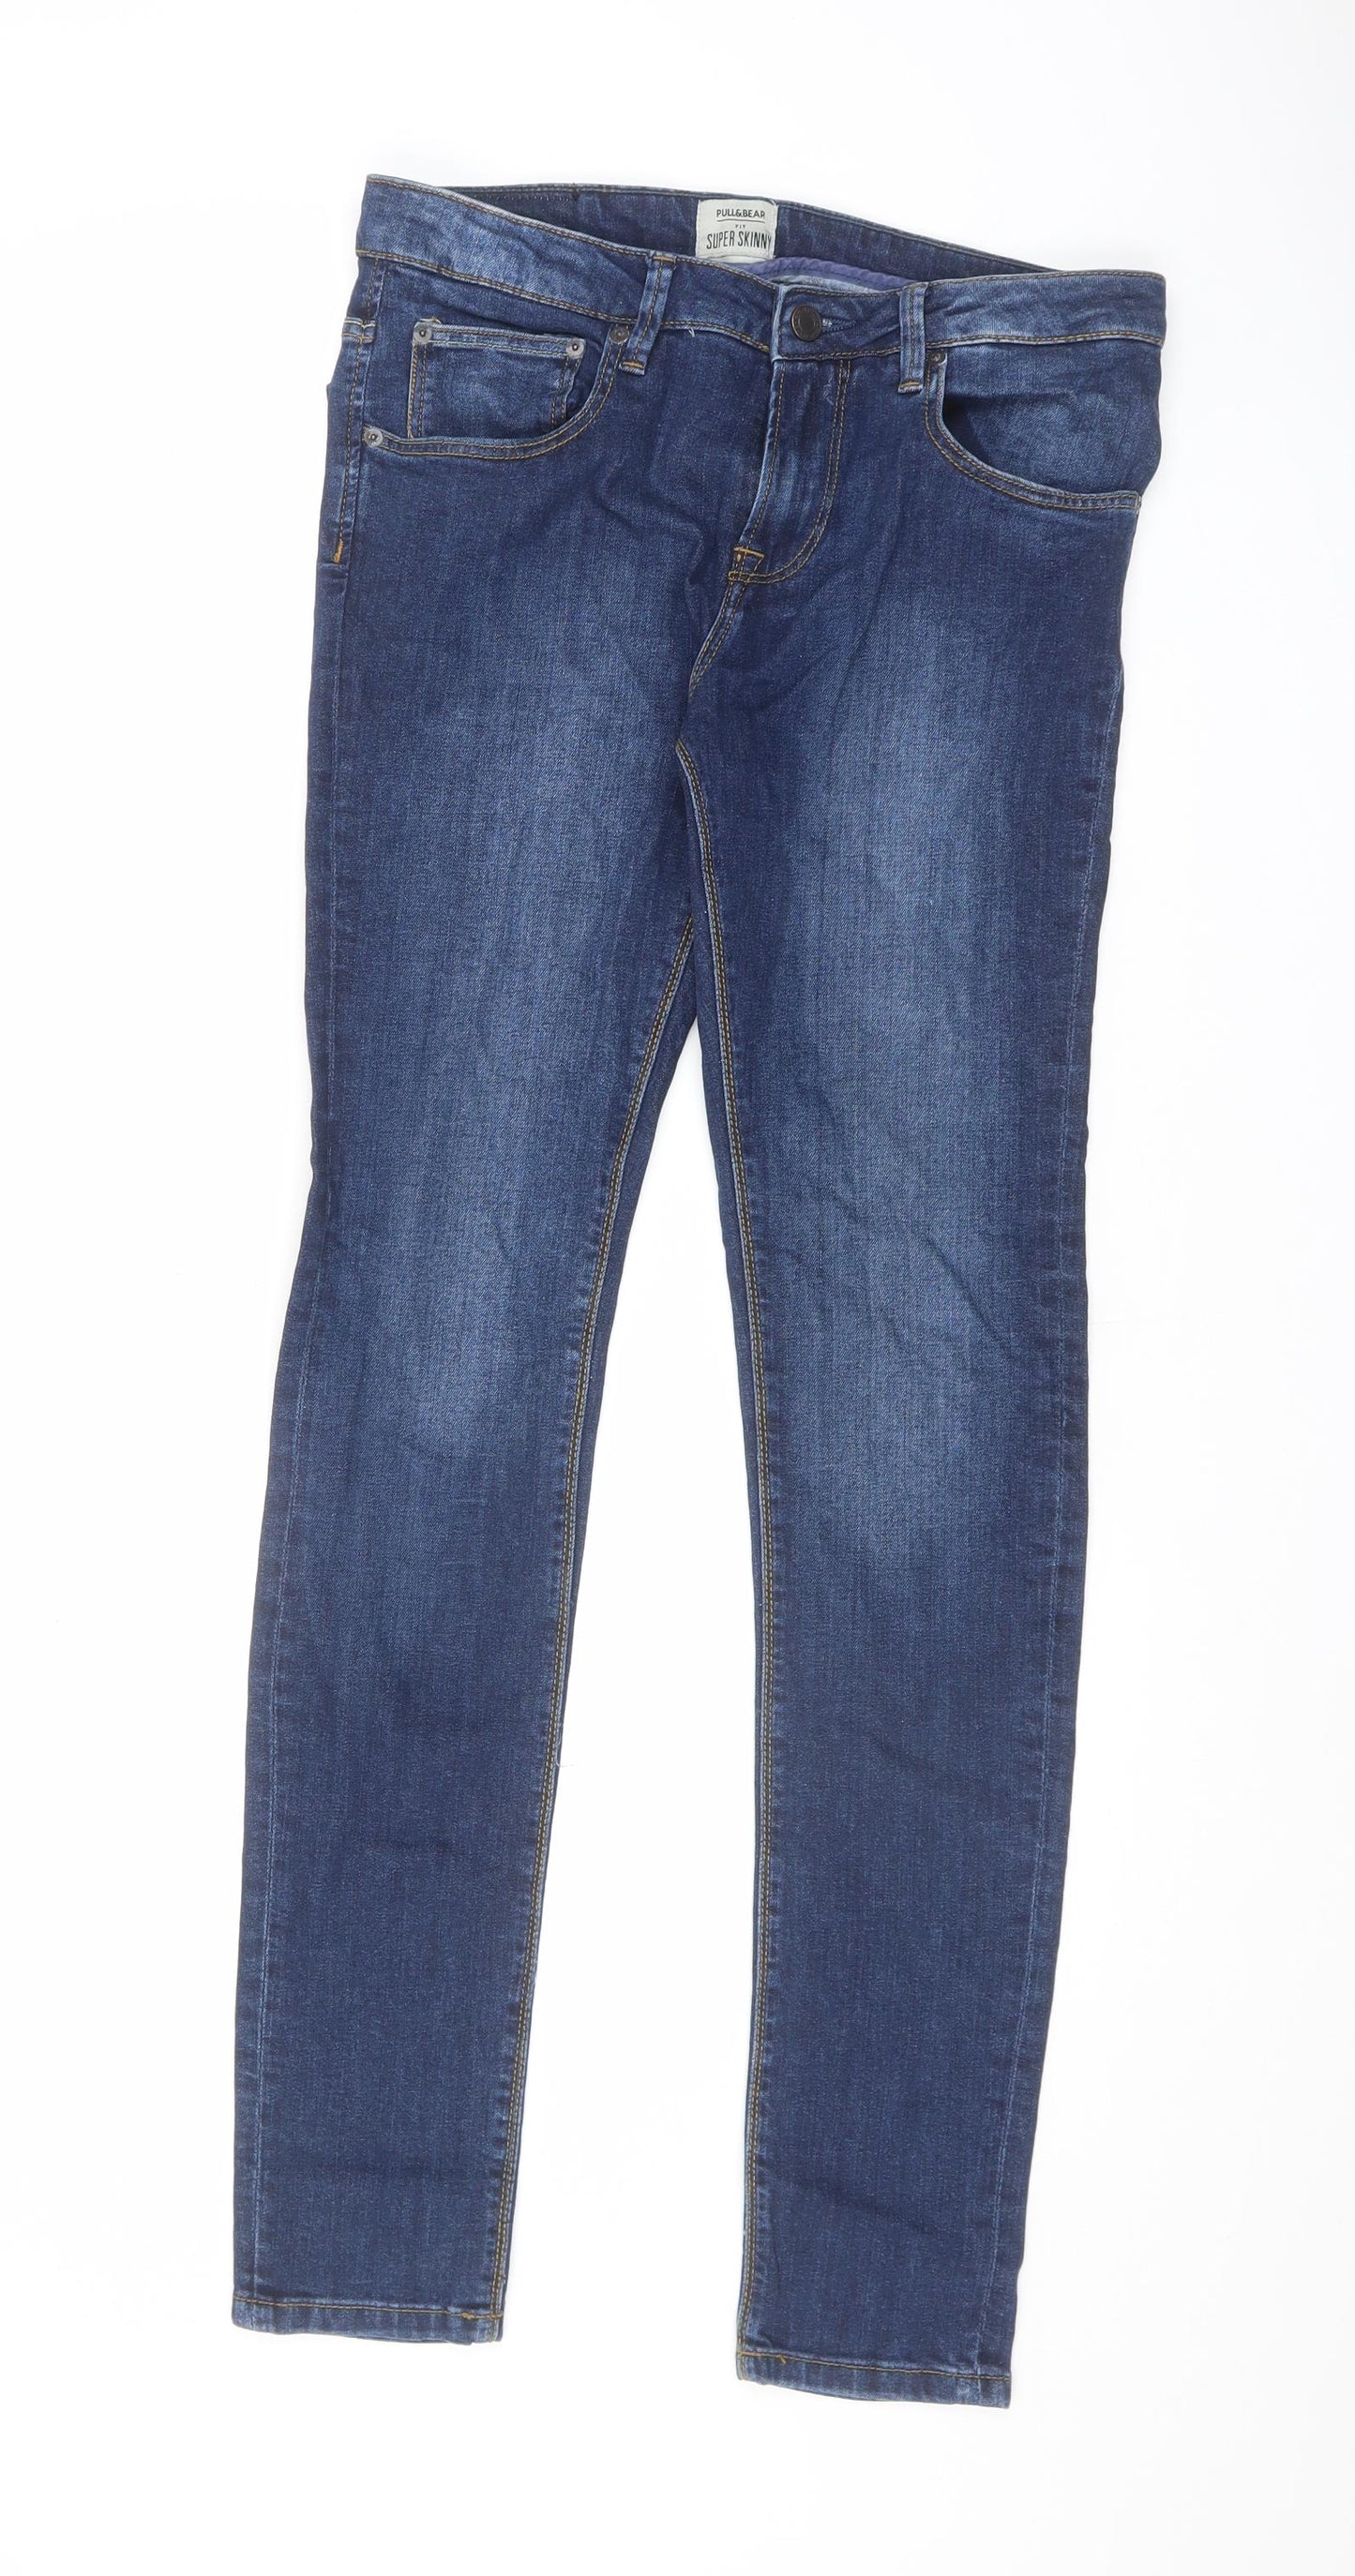 Pull&Bear Womens Blue Cotton Skinny Jeans Size 14 L32.5 in Slim Zip